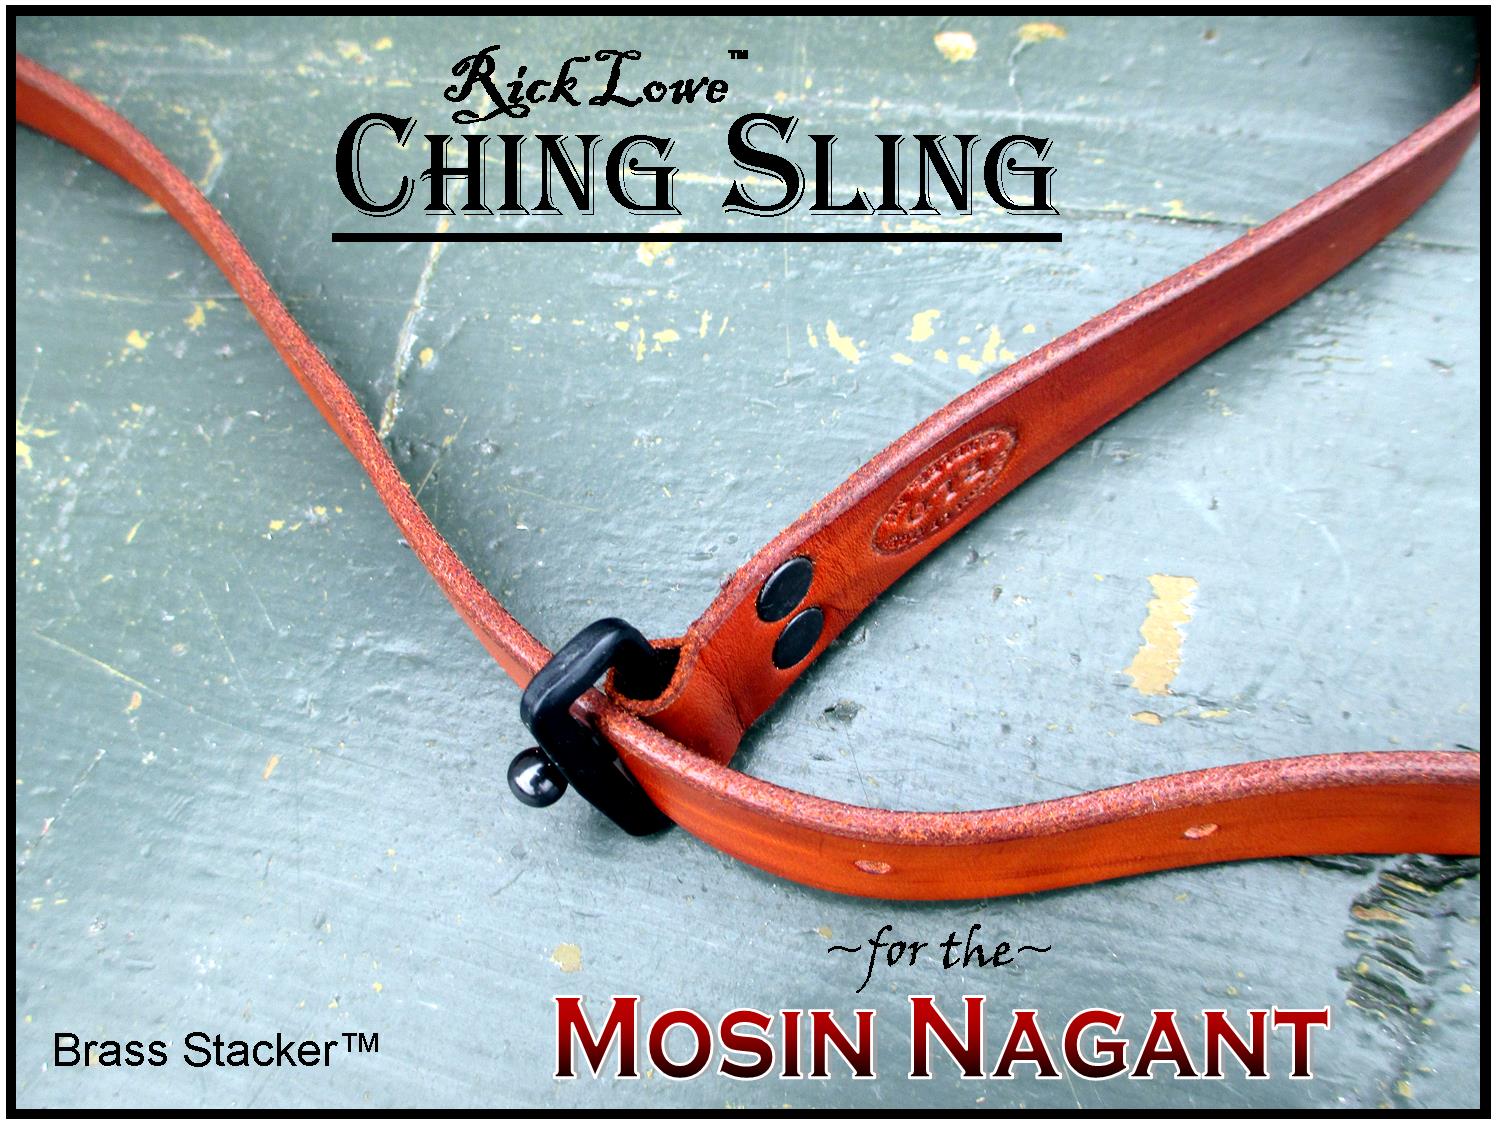 Brass Stacker™ RLO Custom Leather Mosin Nagant Ching Sling